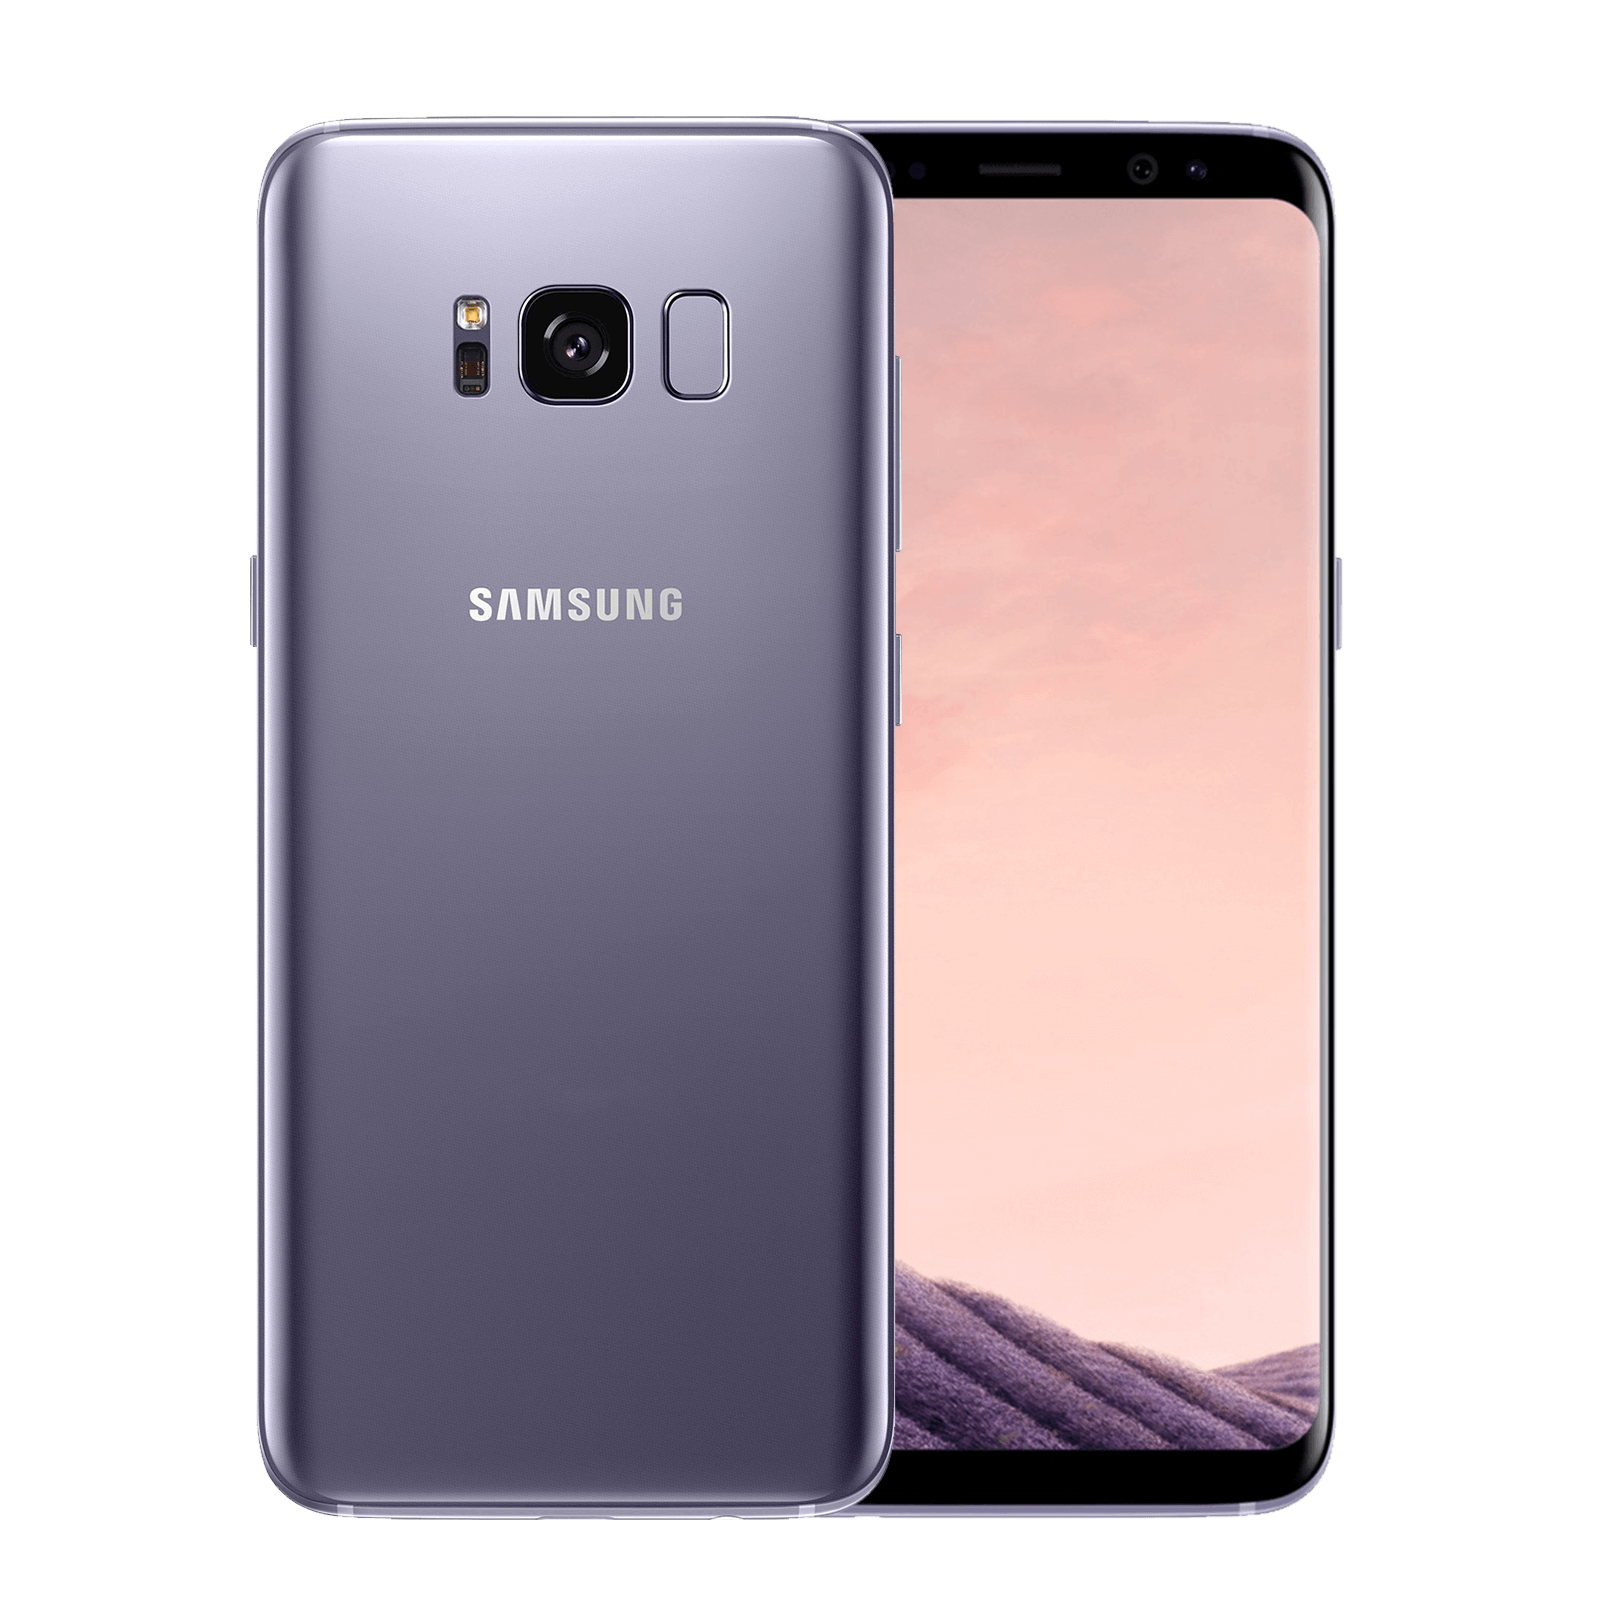 Samsung Galaxy S8 64GB Grey Pristine - Unlocked